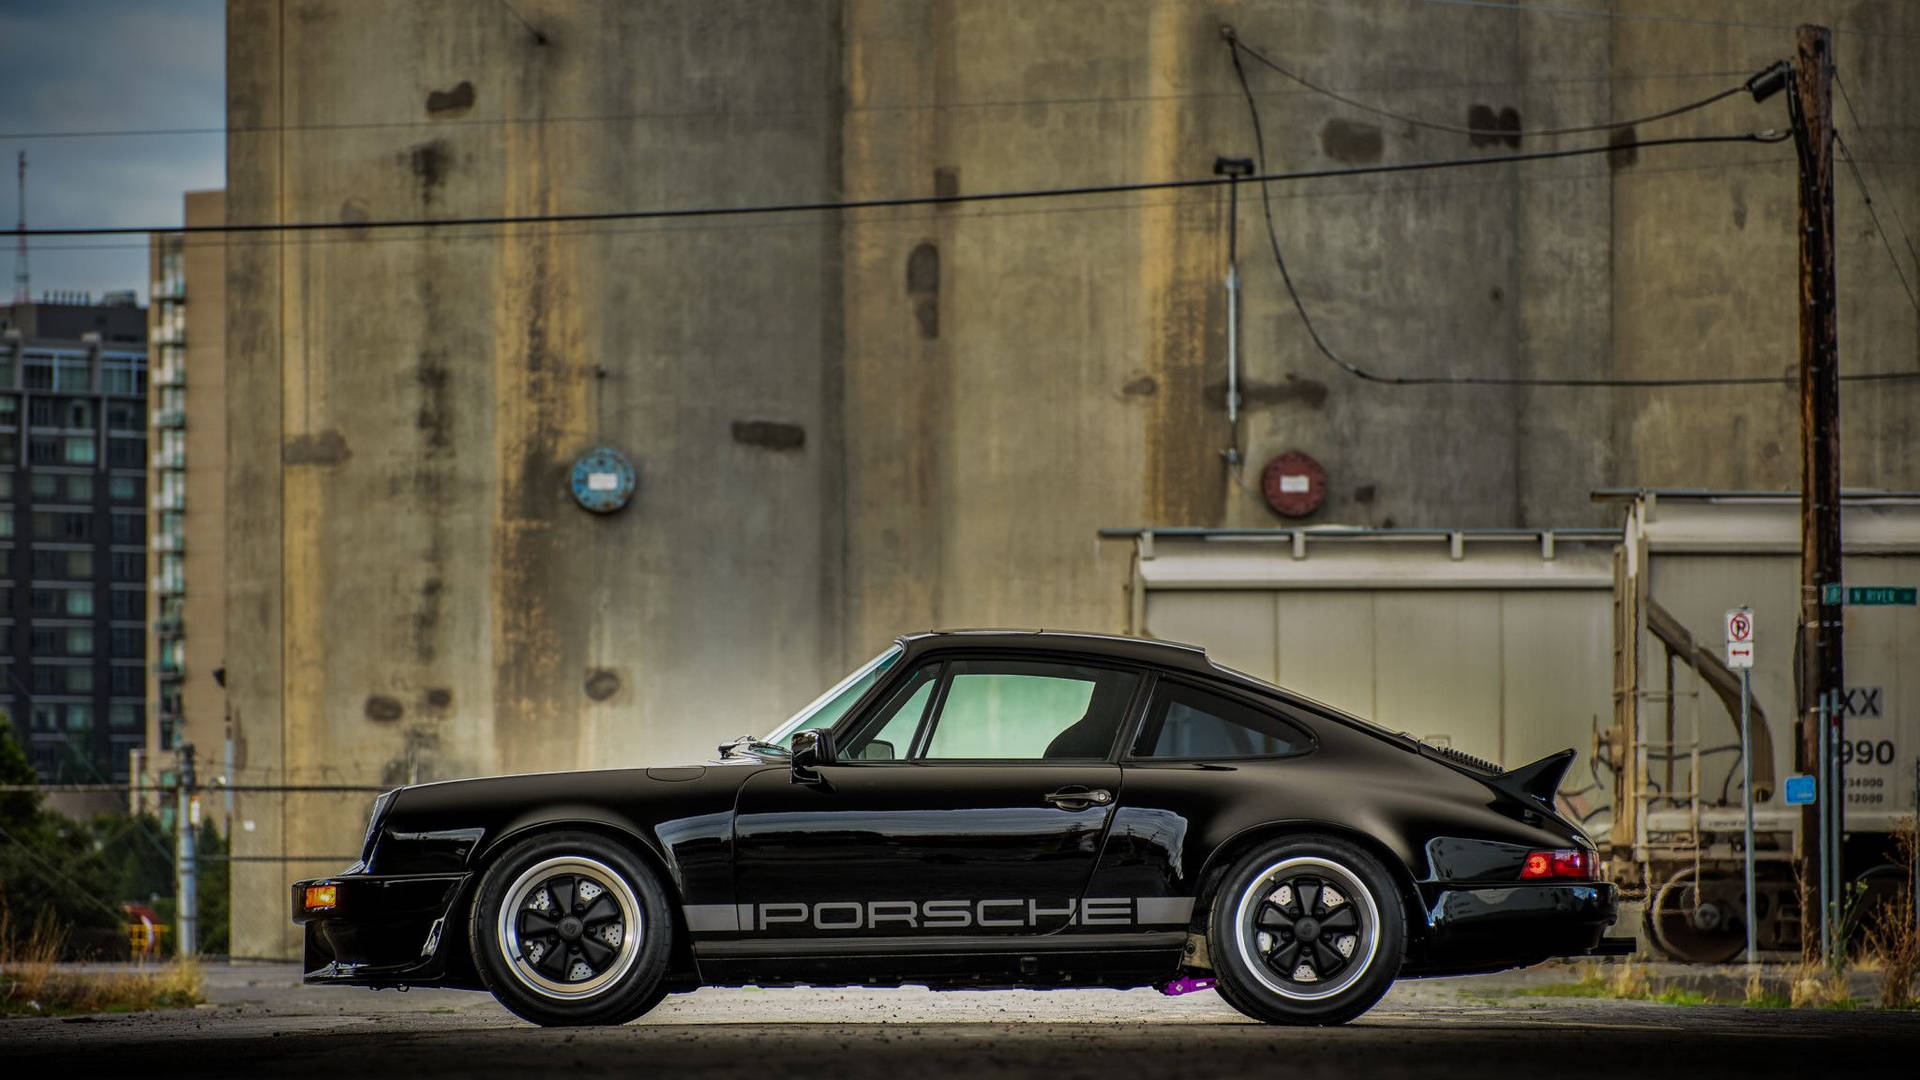 Porsche 911 In Glossy Black Paint